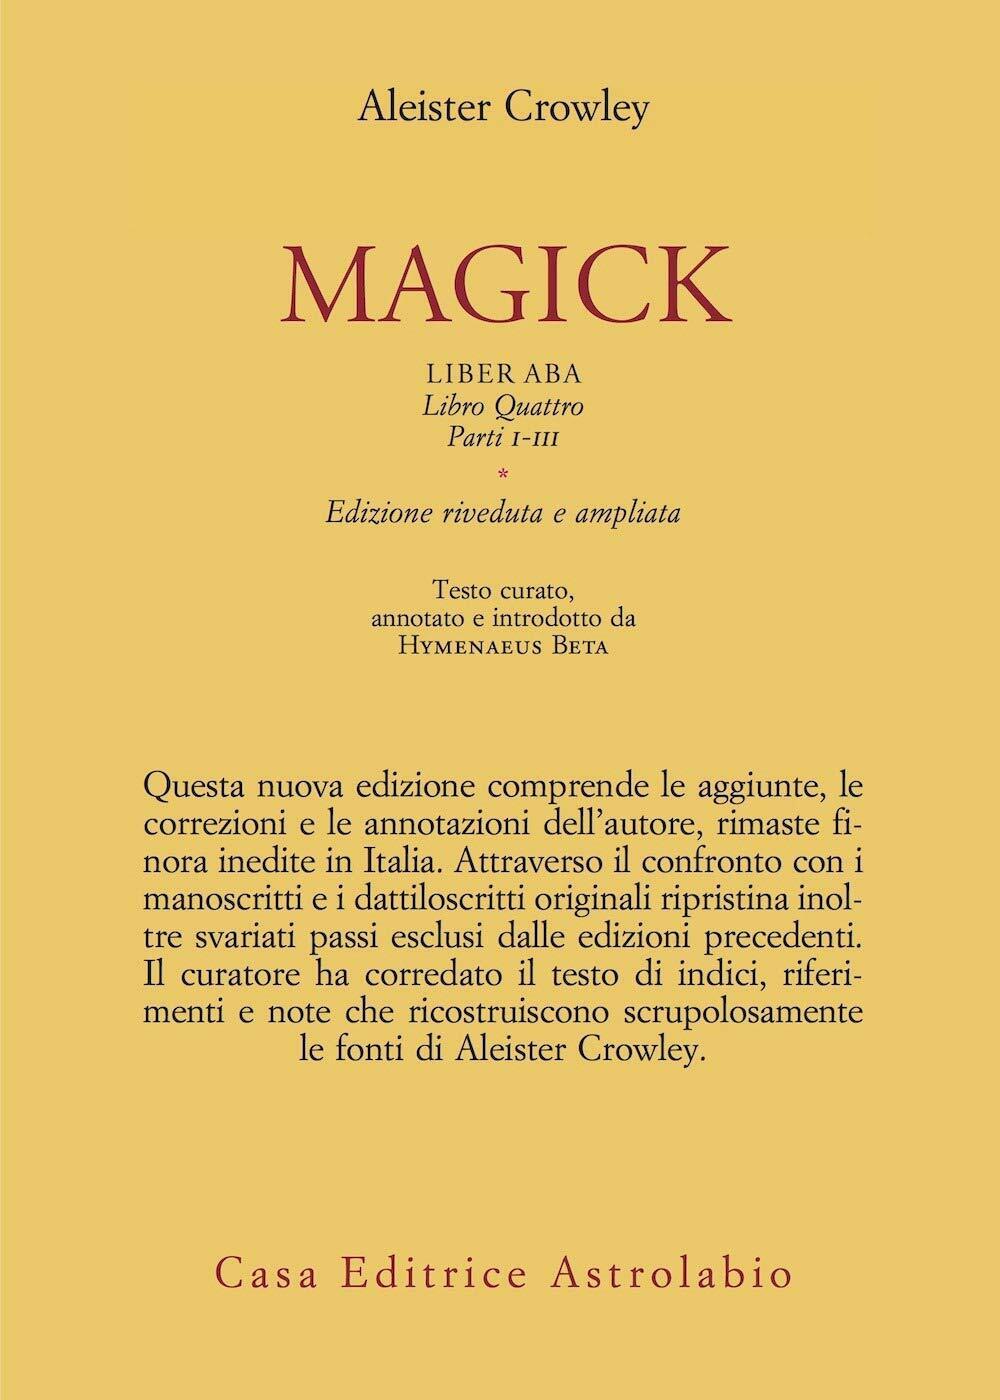 Magick. Liber ABA. Libro quattro. Parti I-III - Aleister Crowley - 2021 libro usato